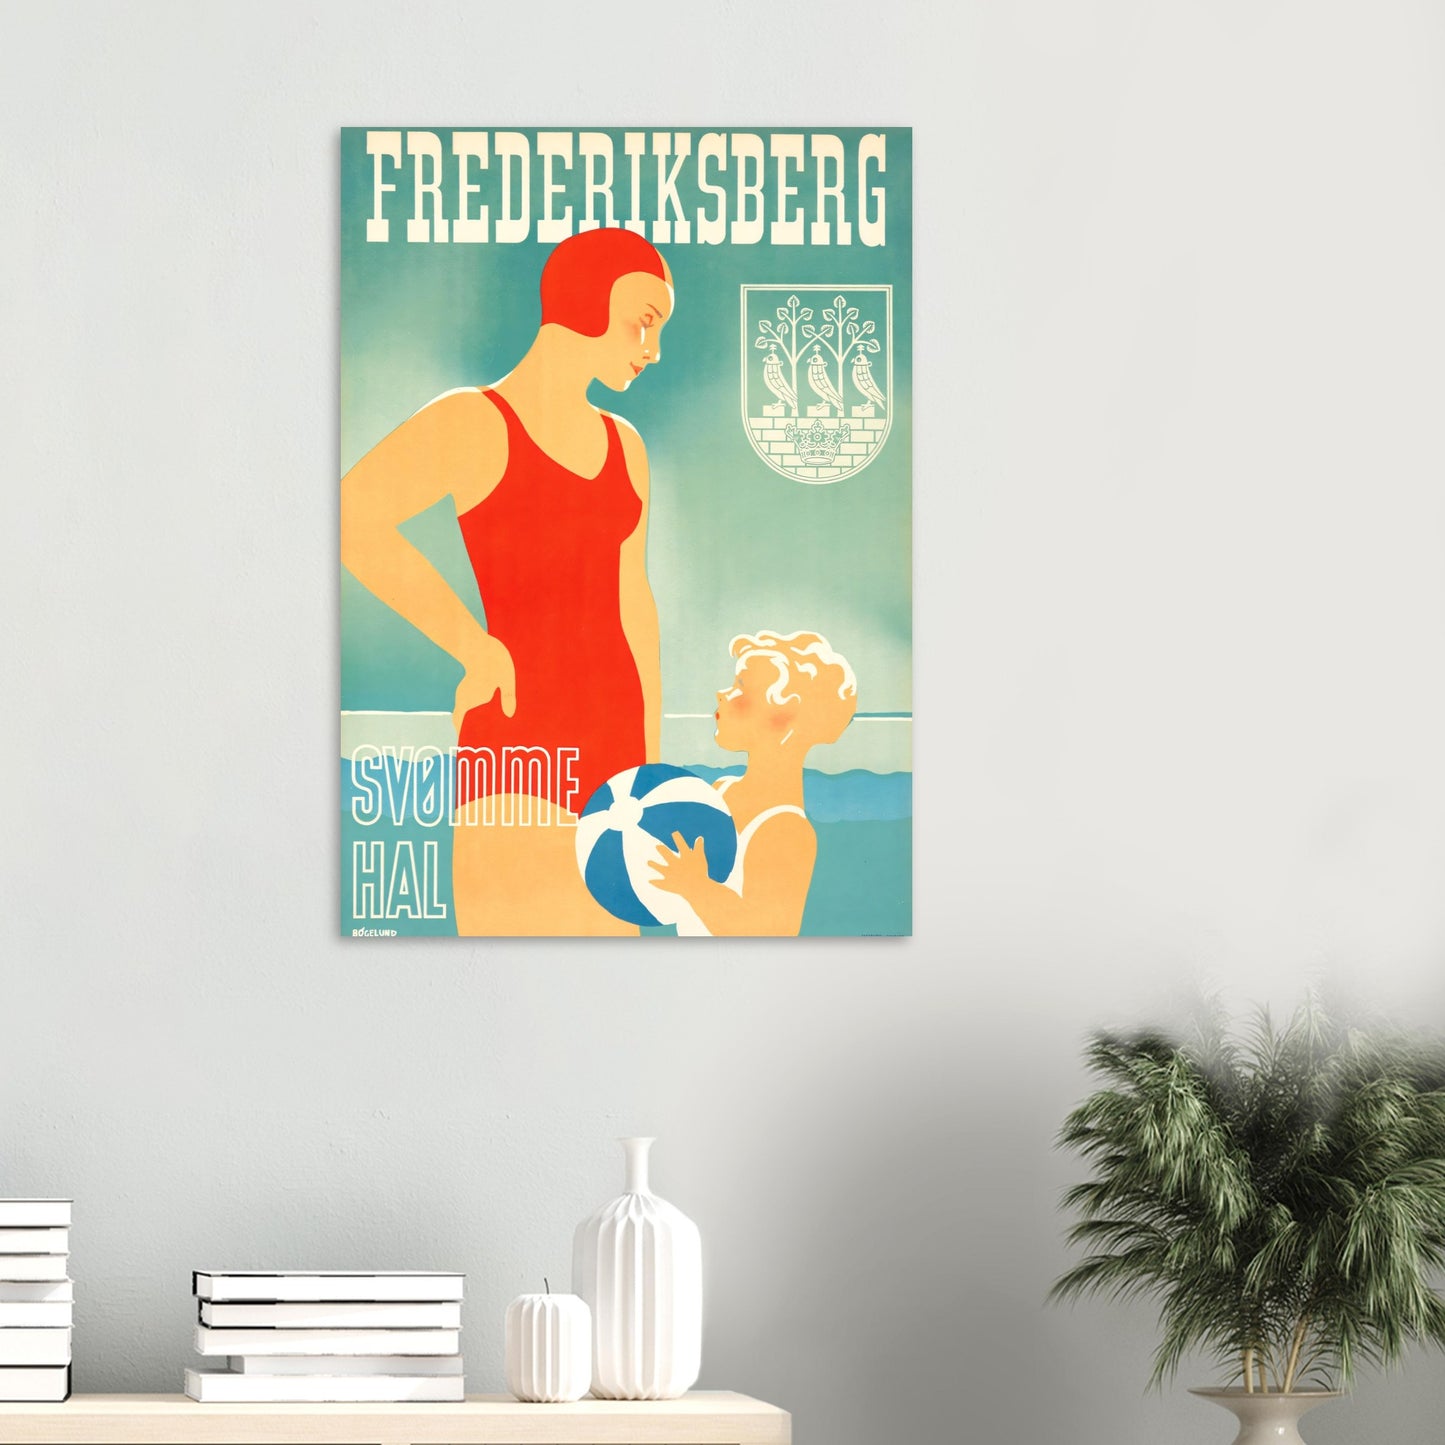 Frederiksberg Vintage Poster Reprint on Premium matte paper - Posterify